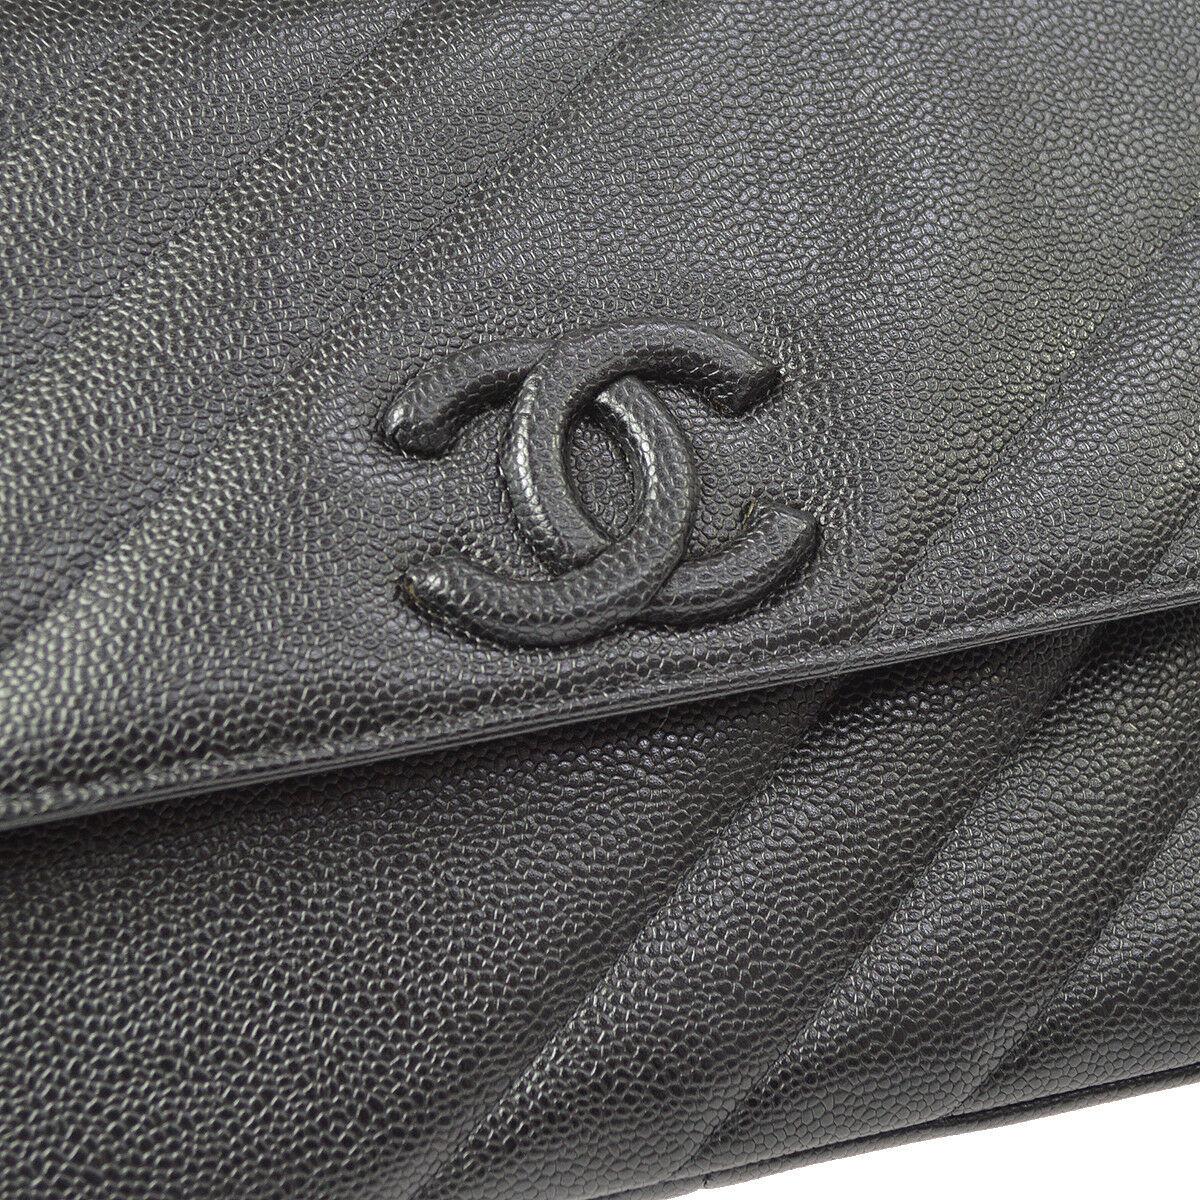 Chanel Rare Black Leather Chevron Jumbo Gold Evening Shoulder Flap Bag

Caviar leather 
Gold tone hardware
Leather lining
Date code present
Single shoulder strap drop 14